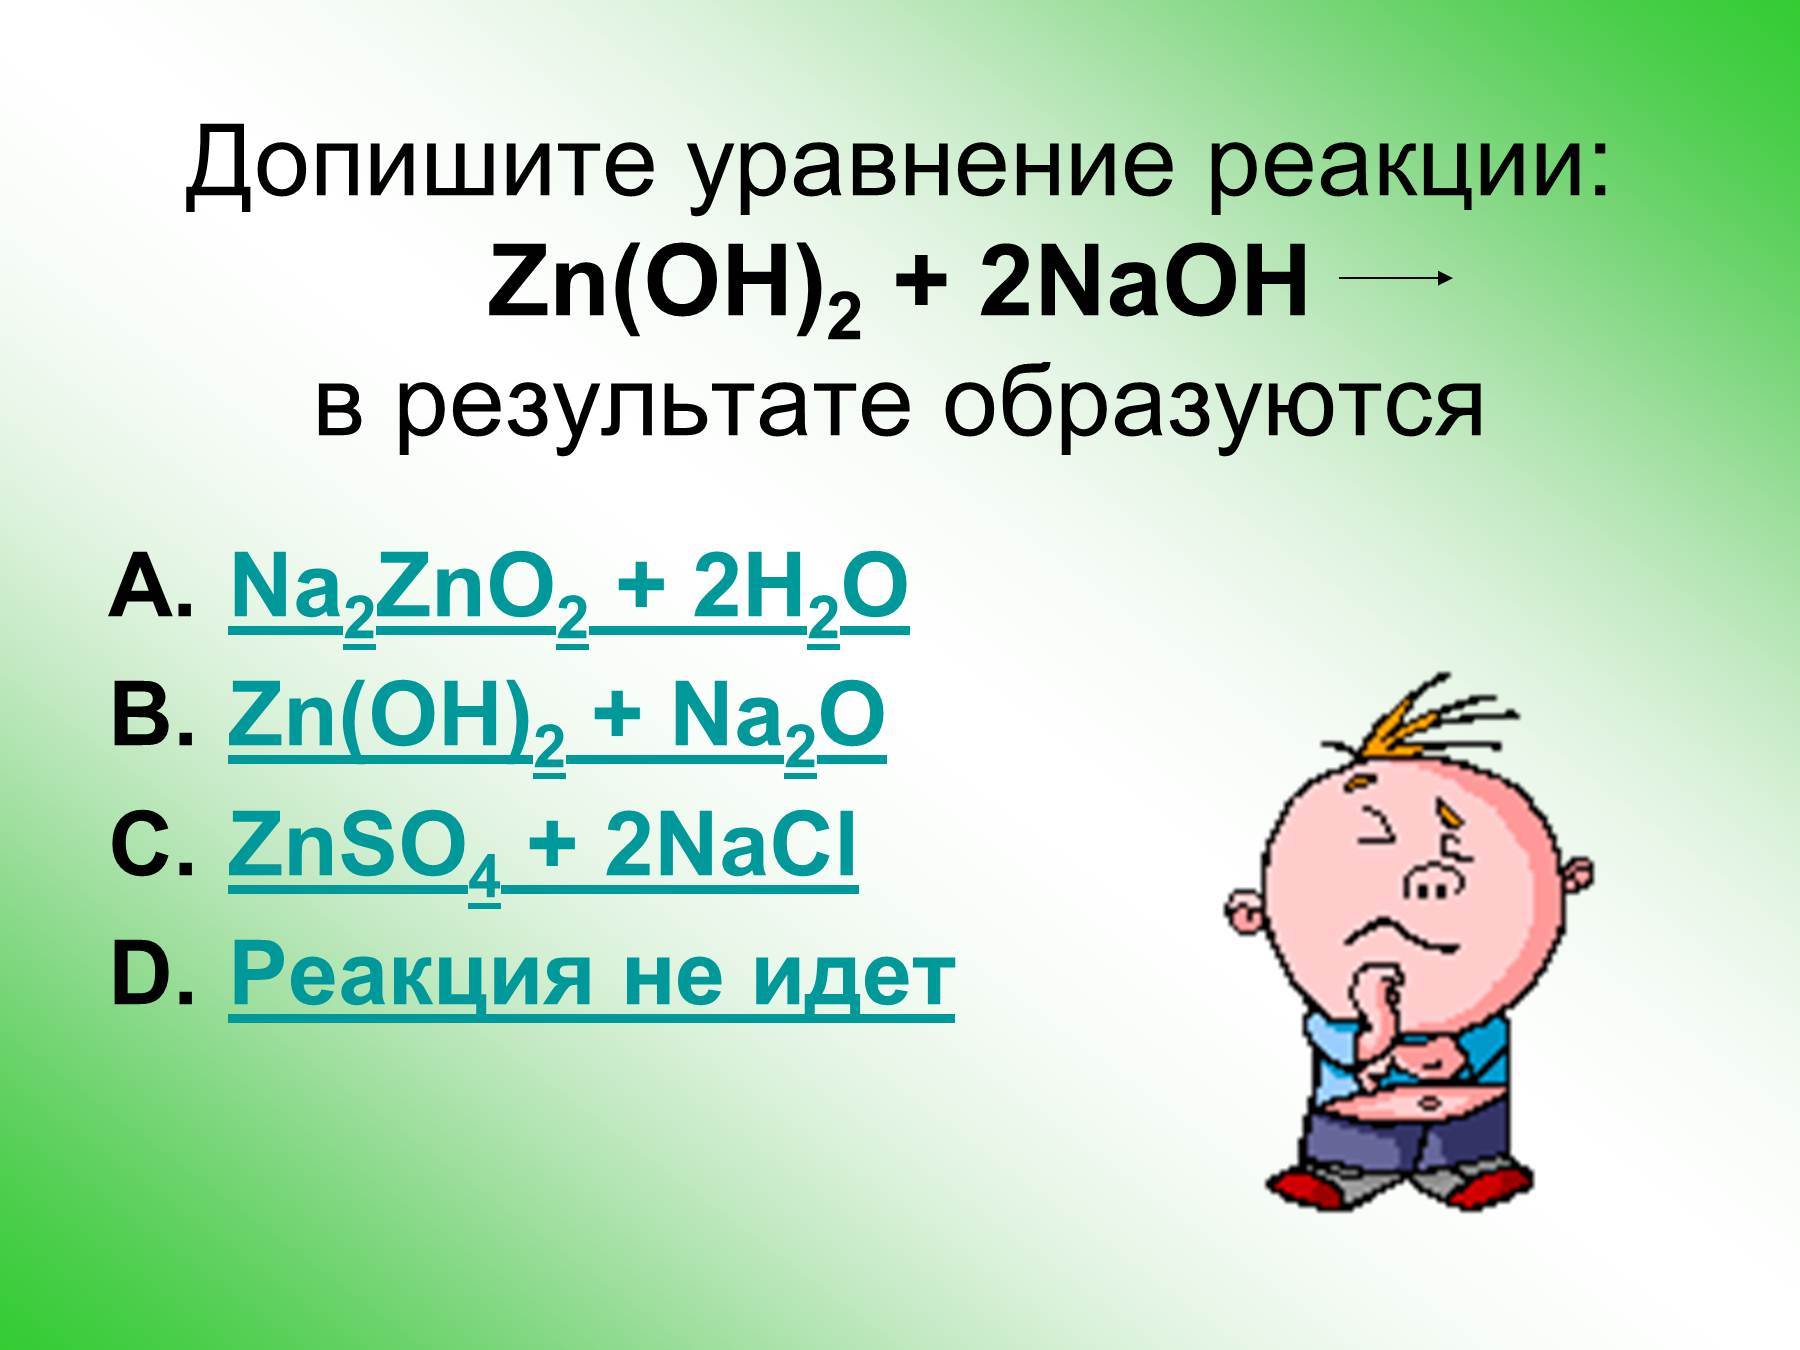 Zn x y zno. ZN Oh 2 уравнение реакции. ZN Oh 2 реакции. ZN(Oh)2. ZNO уравнение реакции.